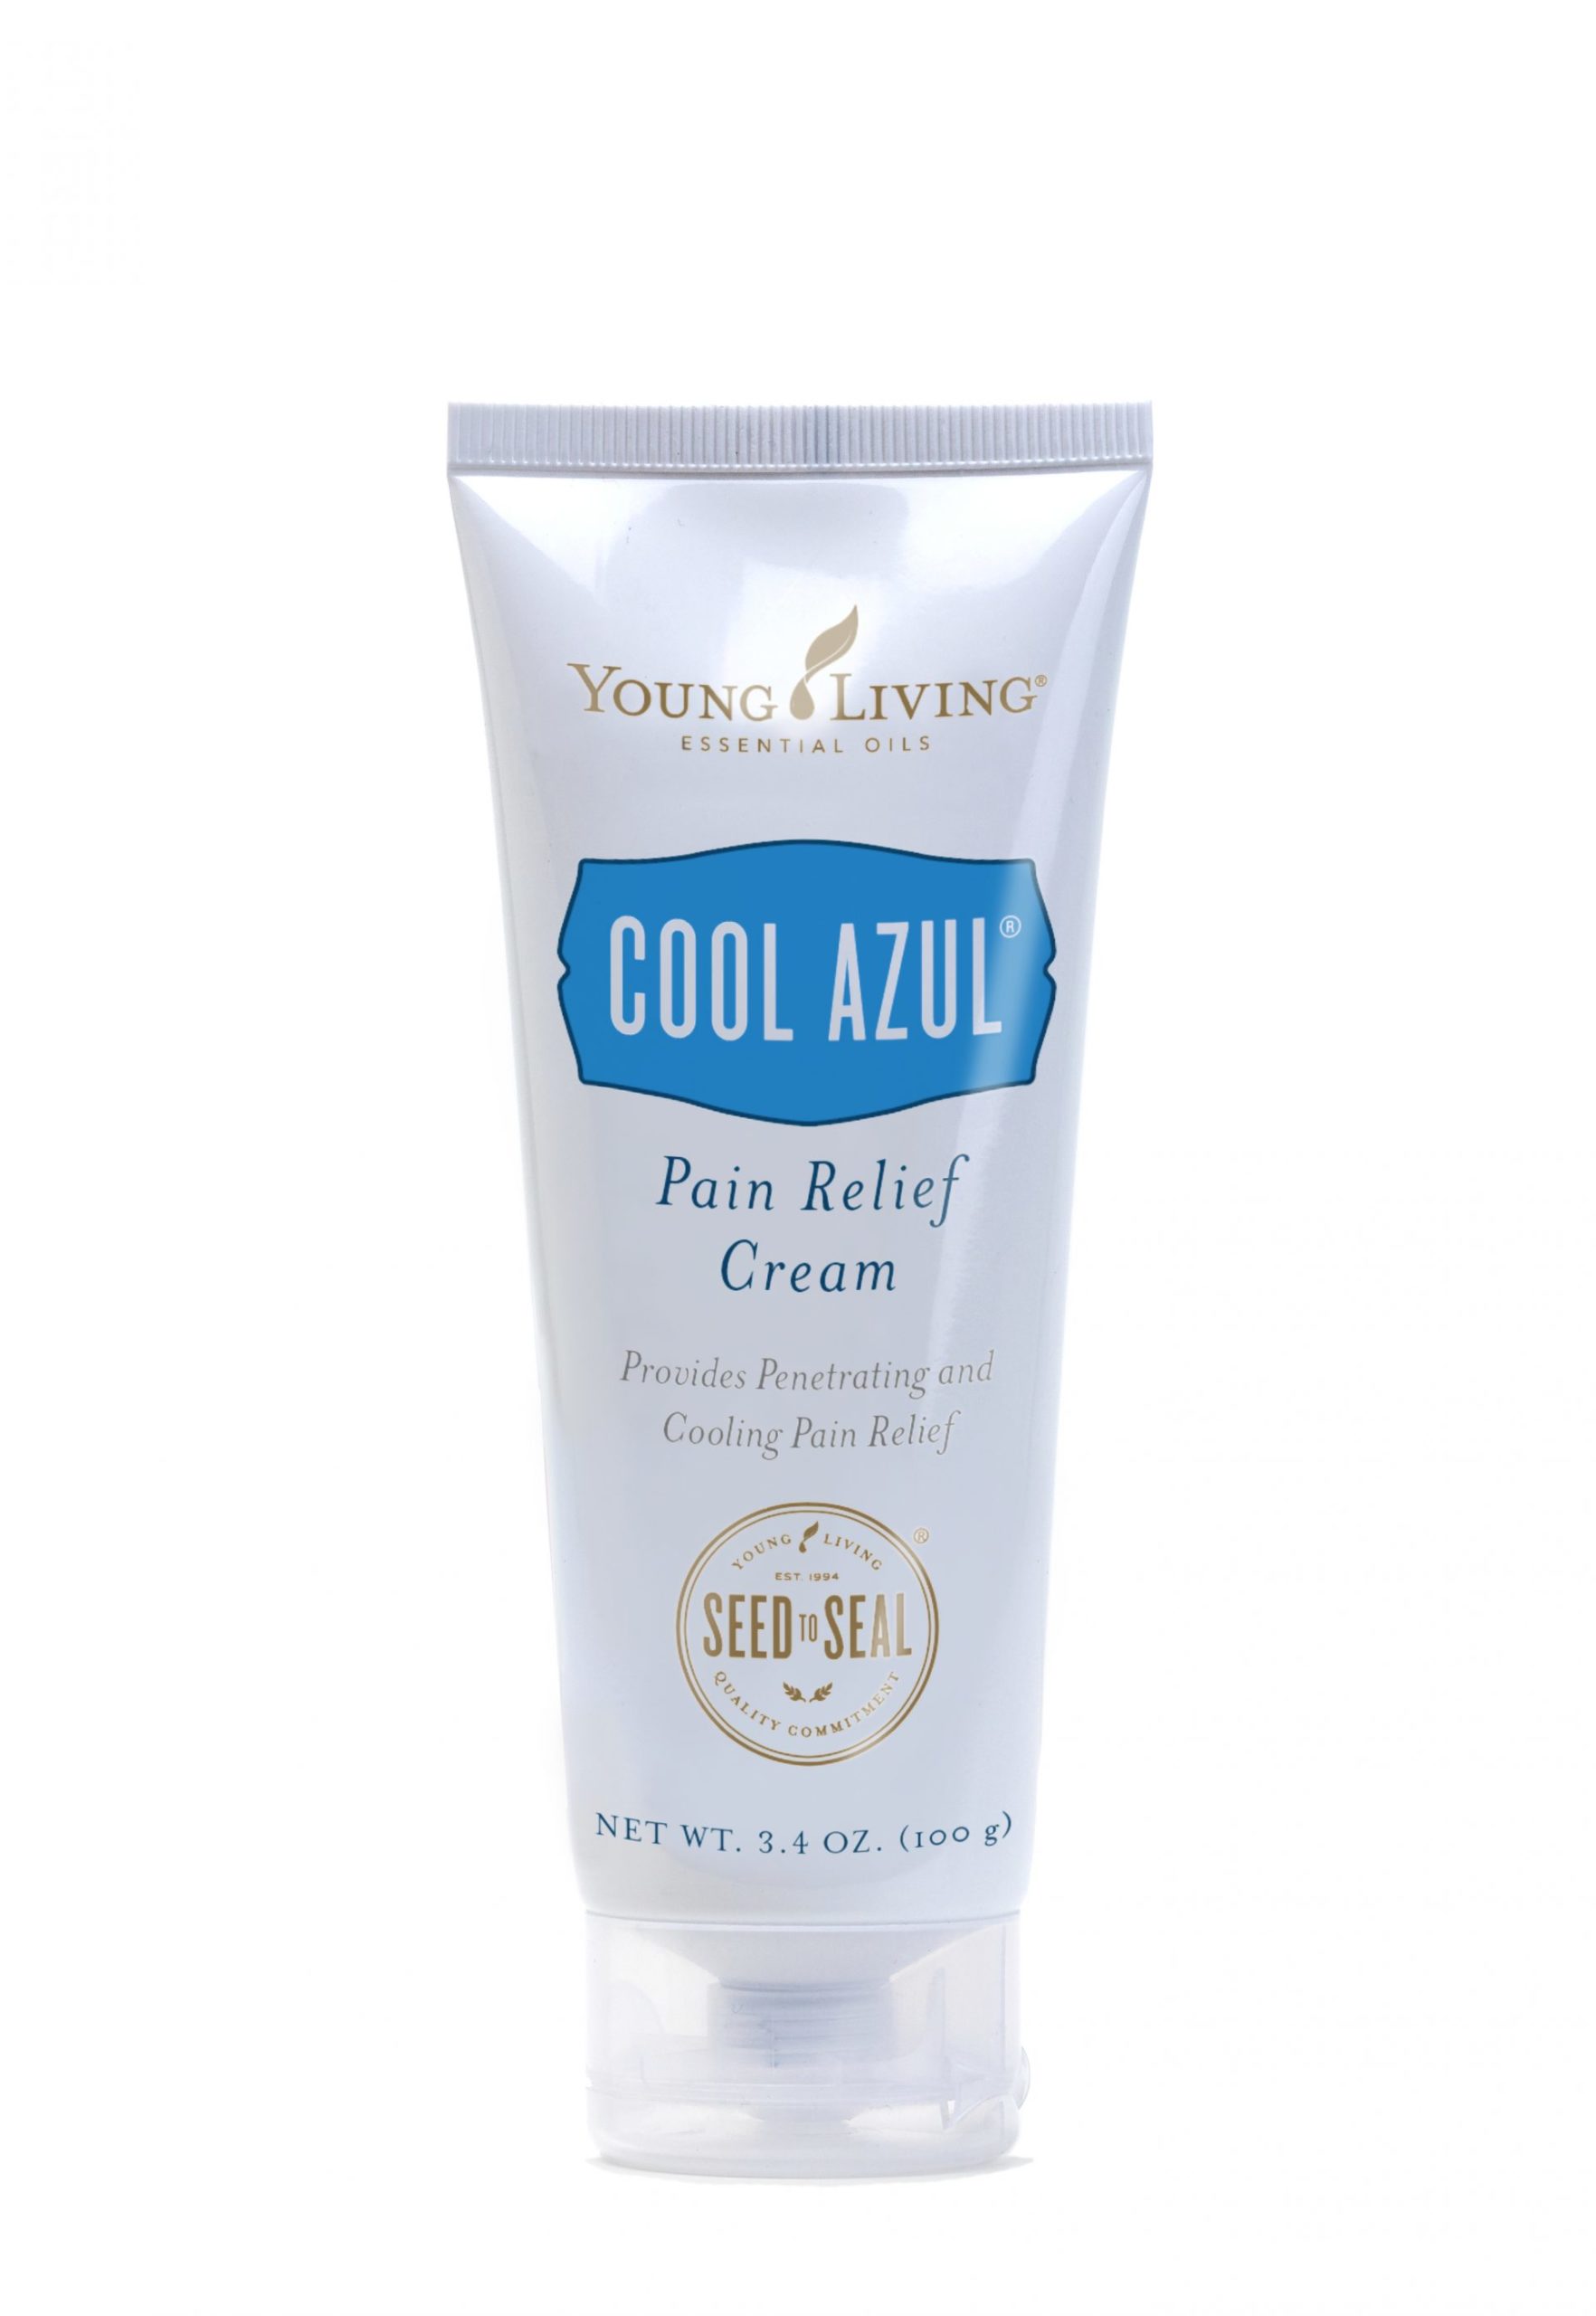 Cool Azul pain relief cream 